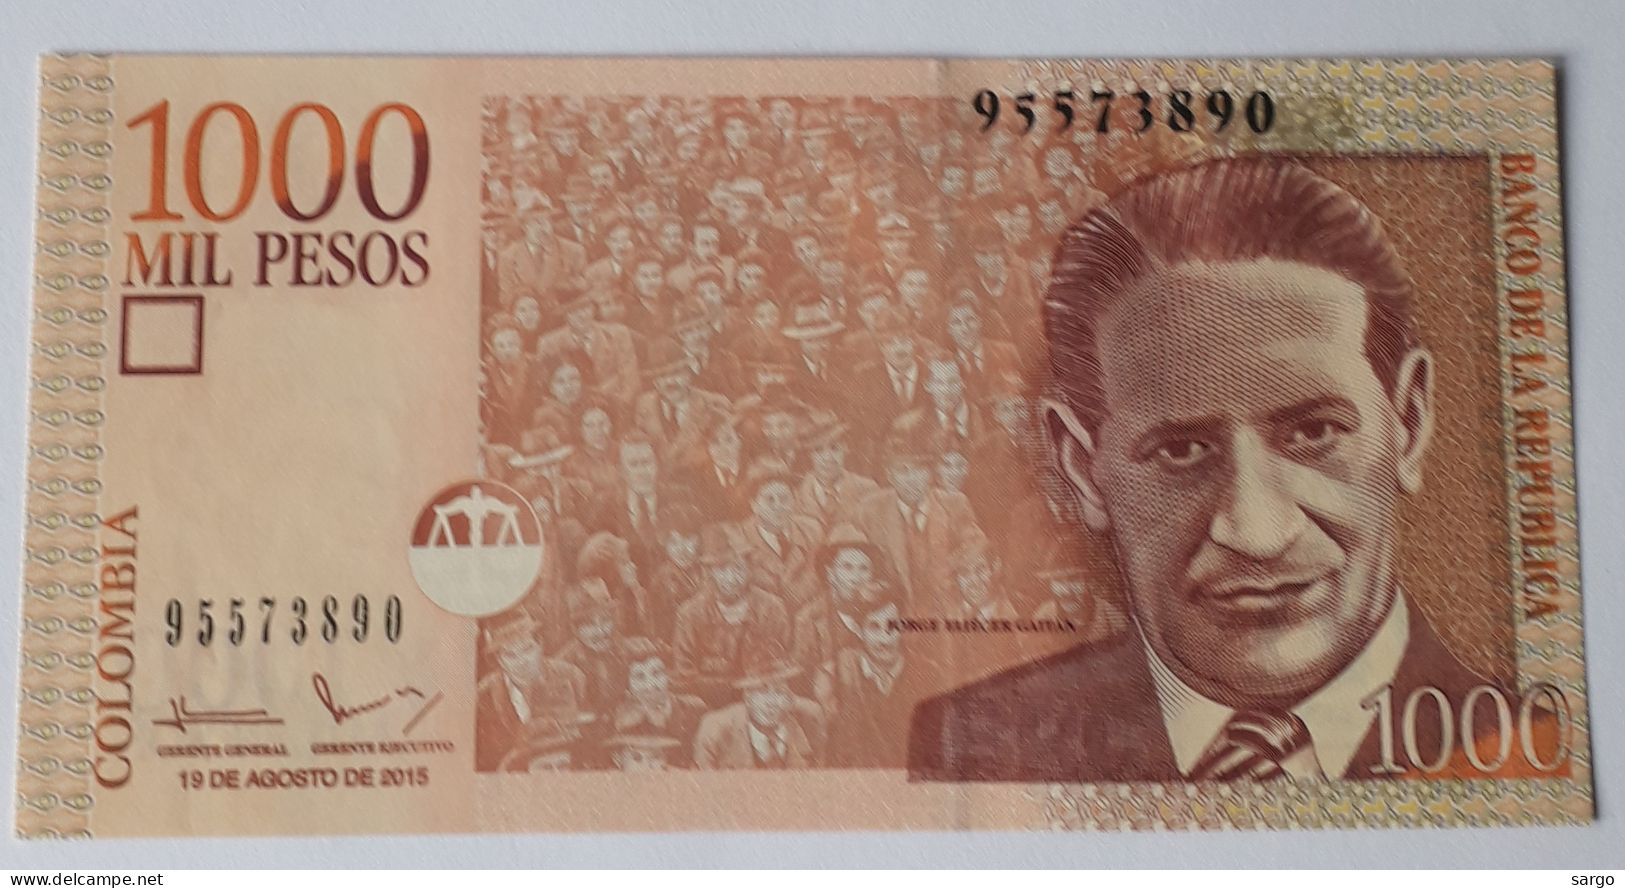 COLOMBIA - 1.000 PESOS - P 456 (2015) - UNC - BANKNOTES - PAPER MONEY - CARTAMONETA - - Kolumbien